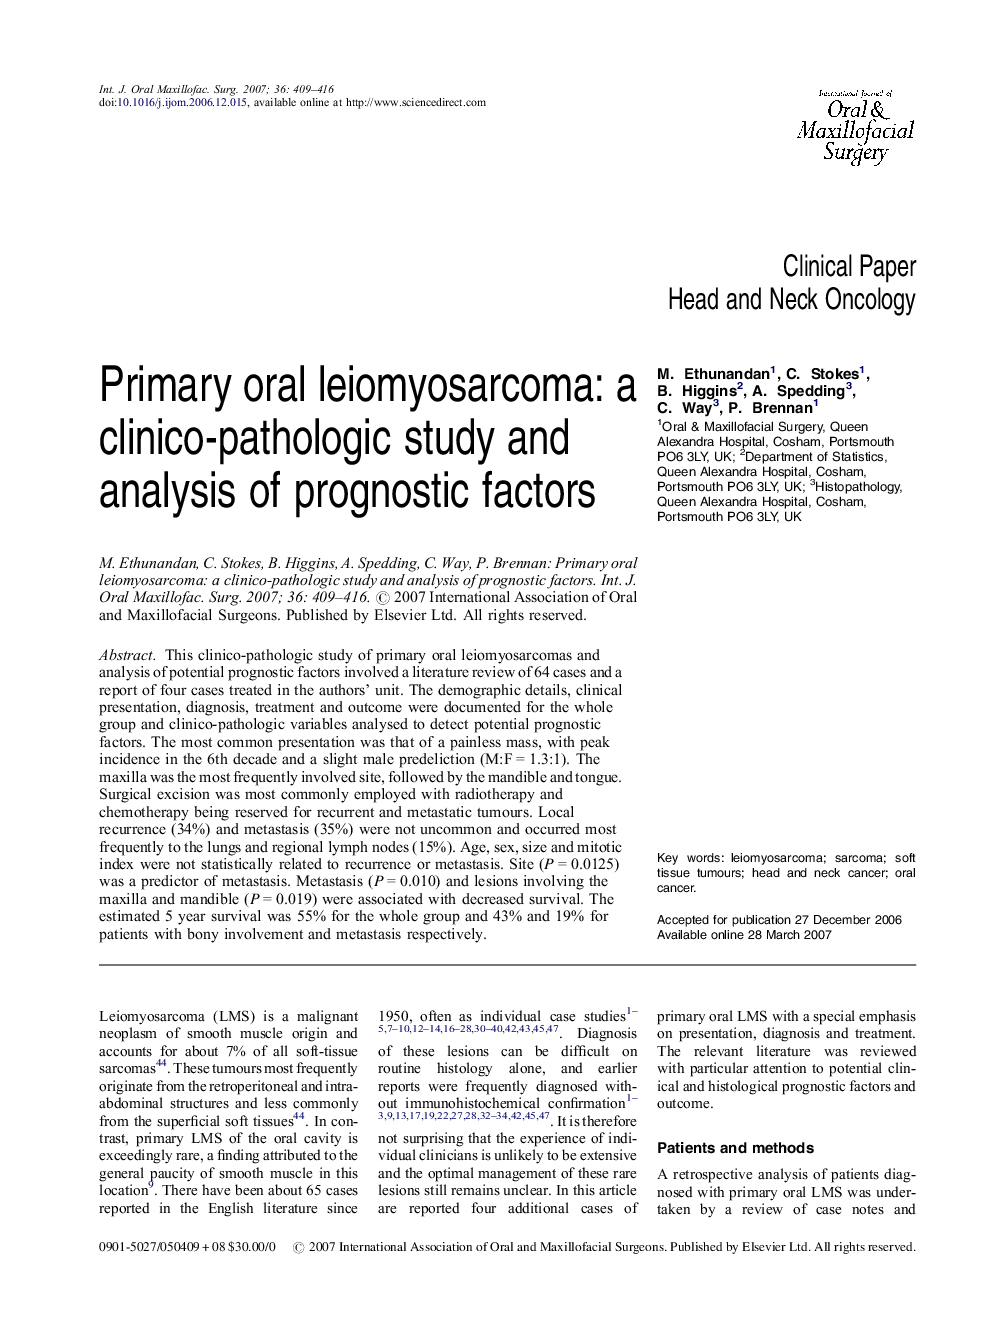 Primary oral leiomyosarcoma: a clinico-pathologic study and analysis of prognostic factors